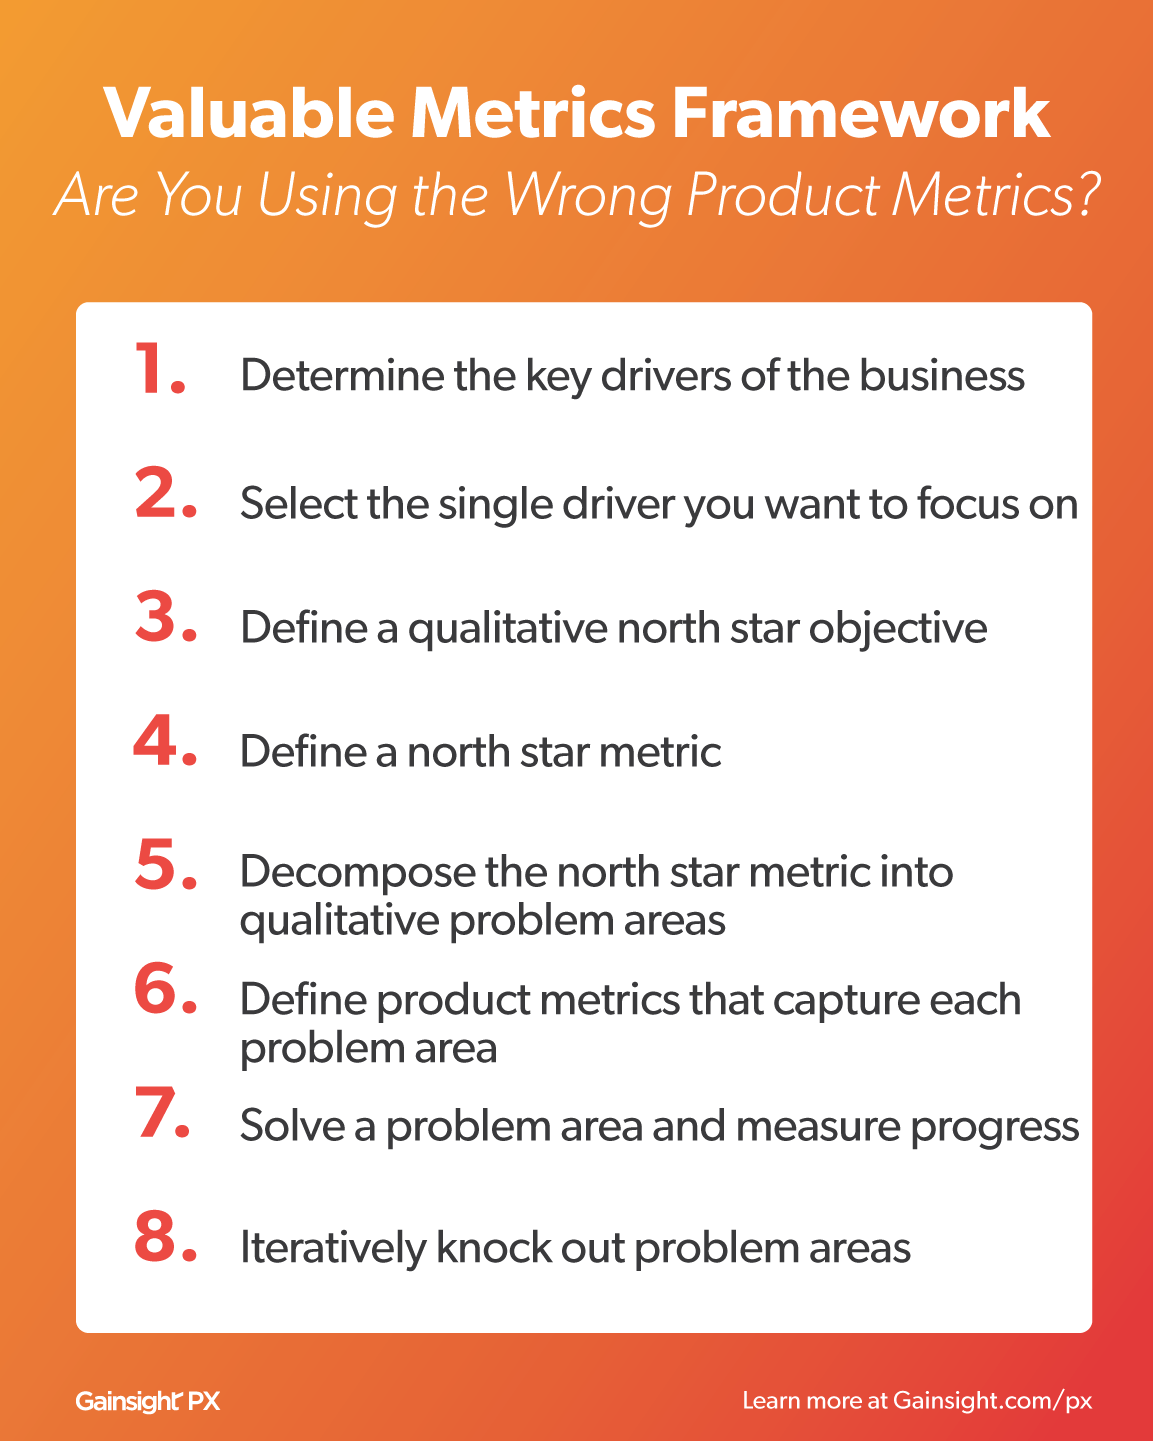 Valuable Metrics Framework Gainsight PX Product Analytics product experience tool 8 1